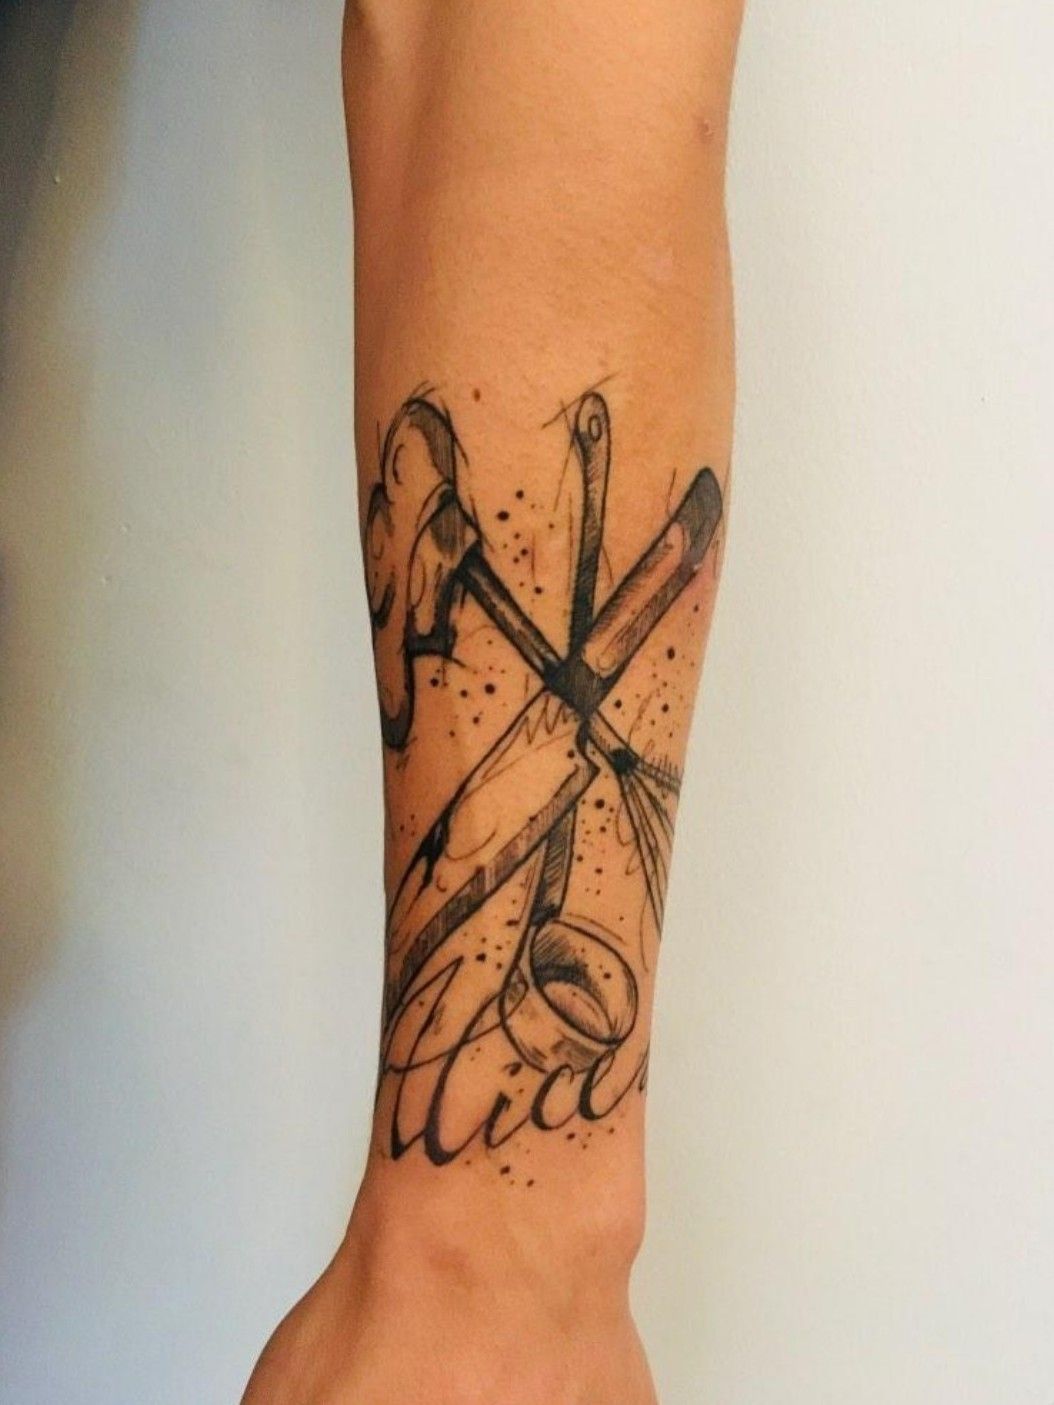 Tattoo tagged with: drum, small, tiny, ifttt, little, minimalist, music  instrument, inner forearm, alicangorgu, drumstick, illustrative, music |  inked-app.com